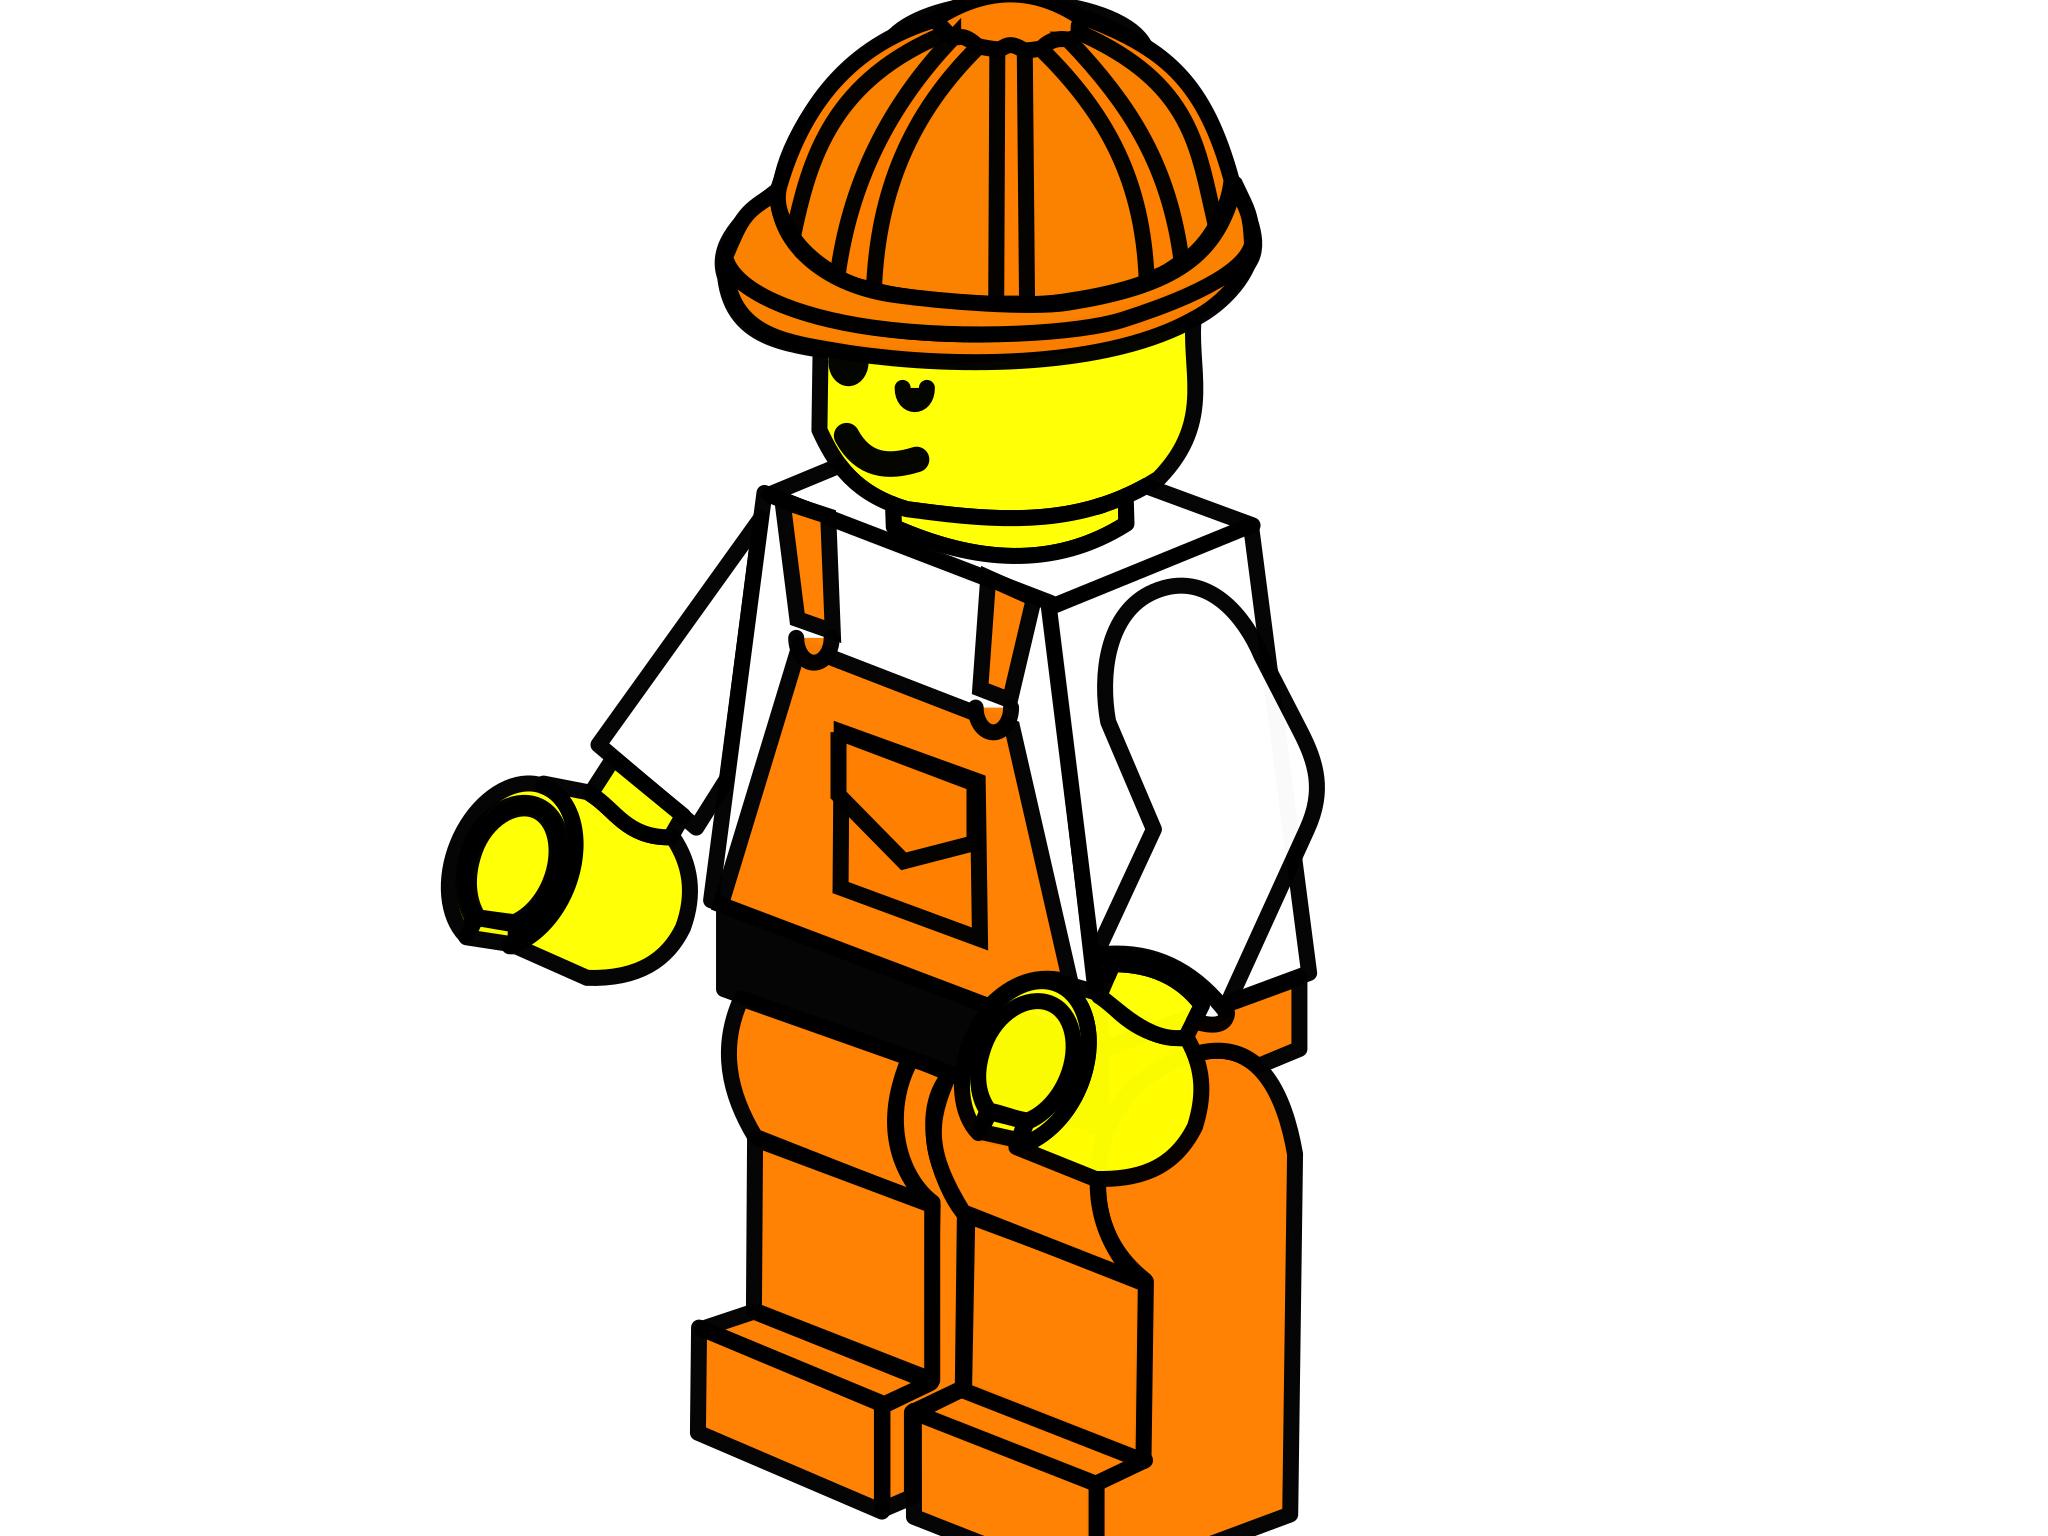 Лего человечки строители на прозрачном фоне